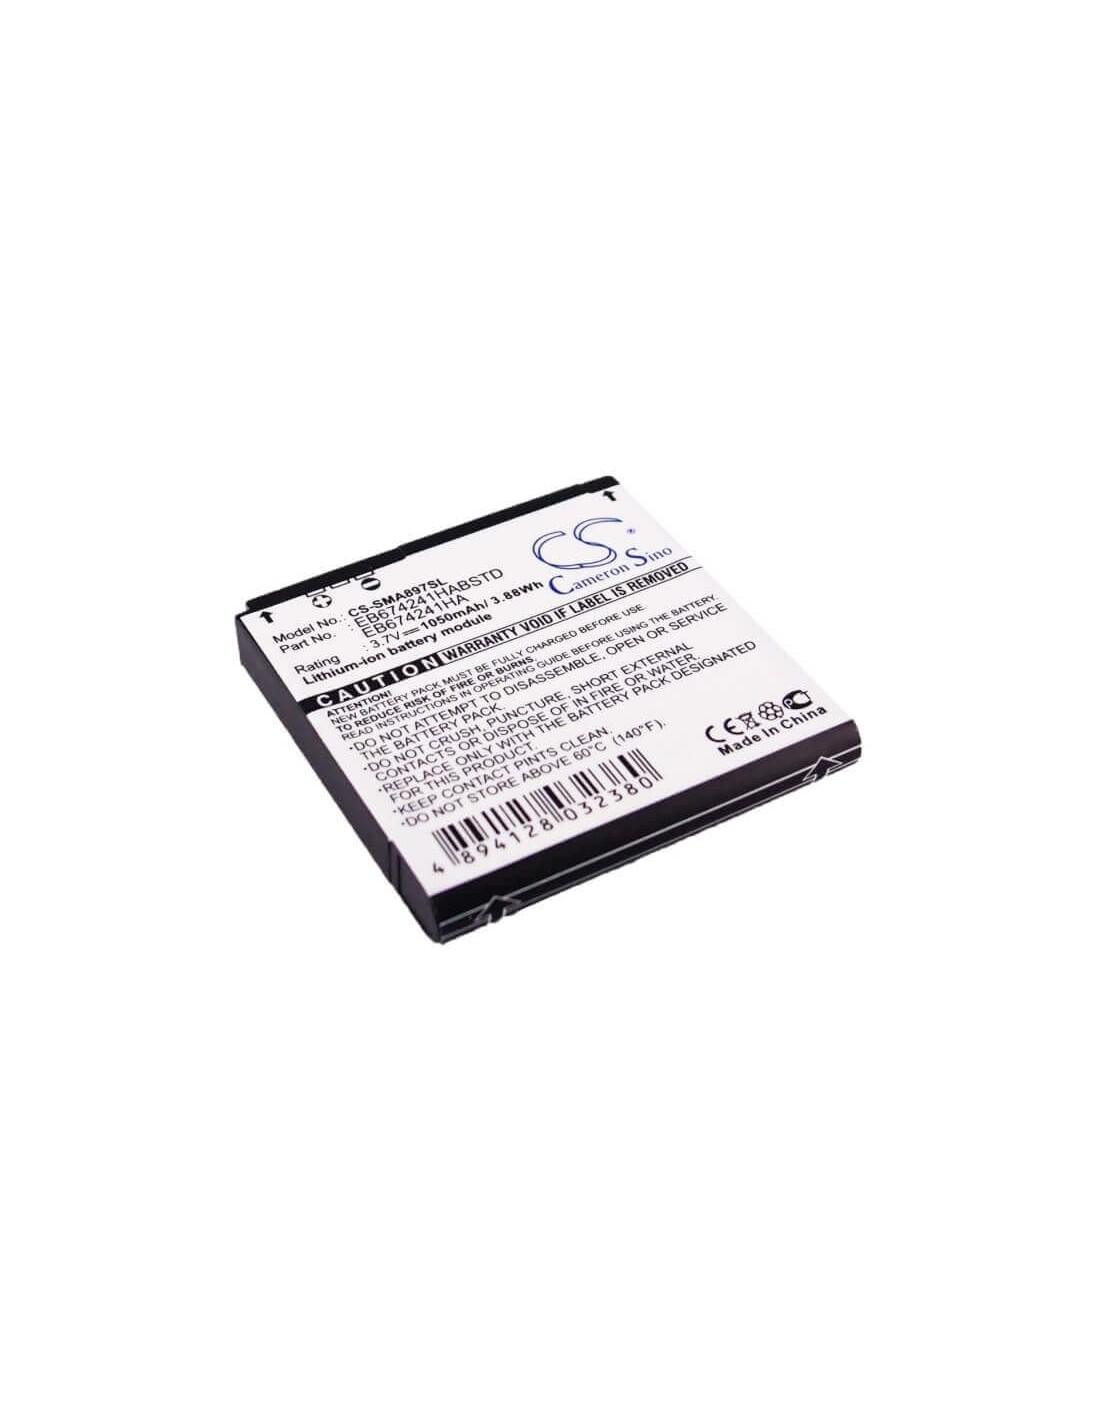 Battery for Samsung Mythic SGH-A897, R860, Mythic A897 3.7V, 1050mAh - 3.89Wh